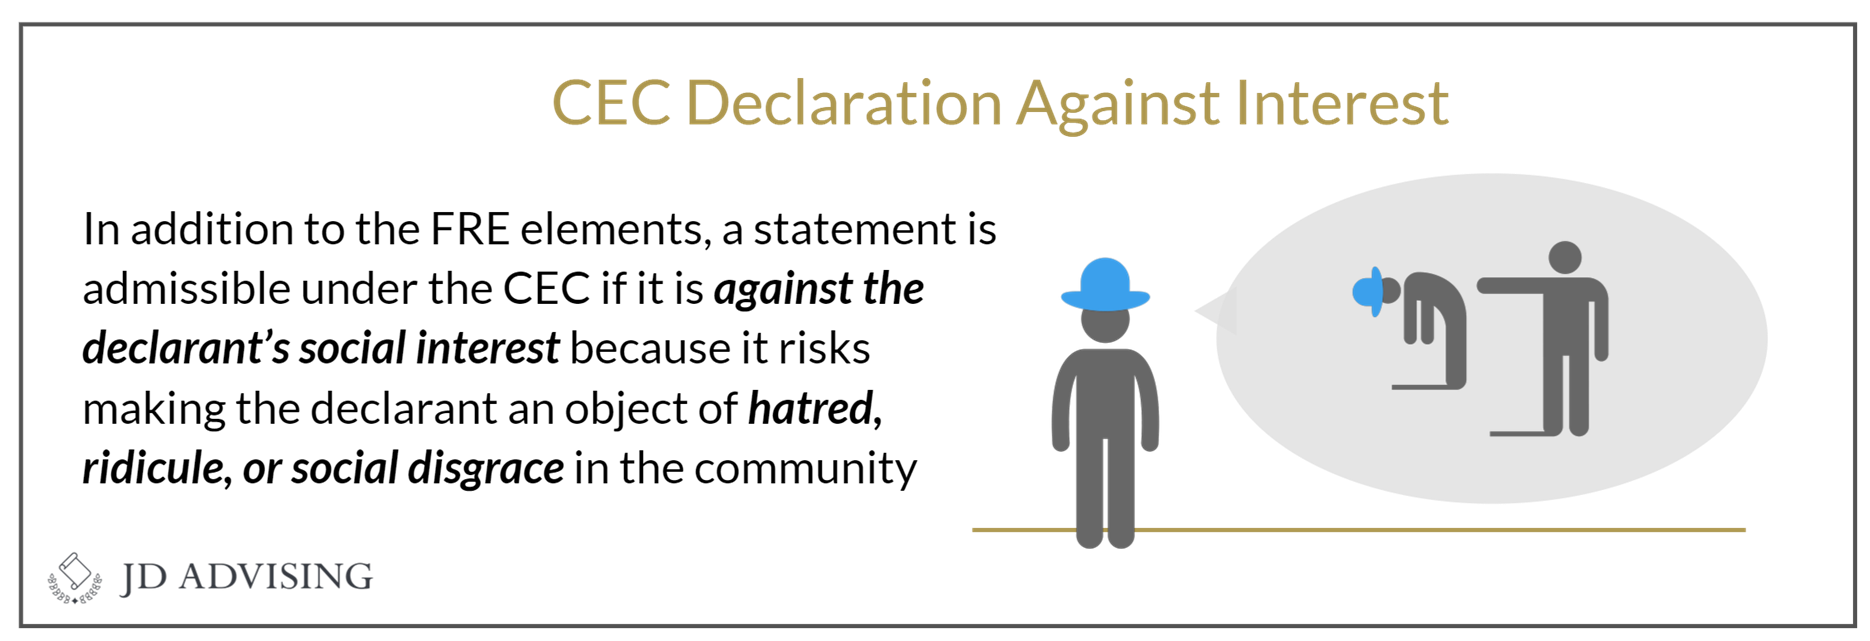 CEC Declaration Against Interest